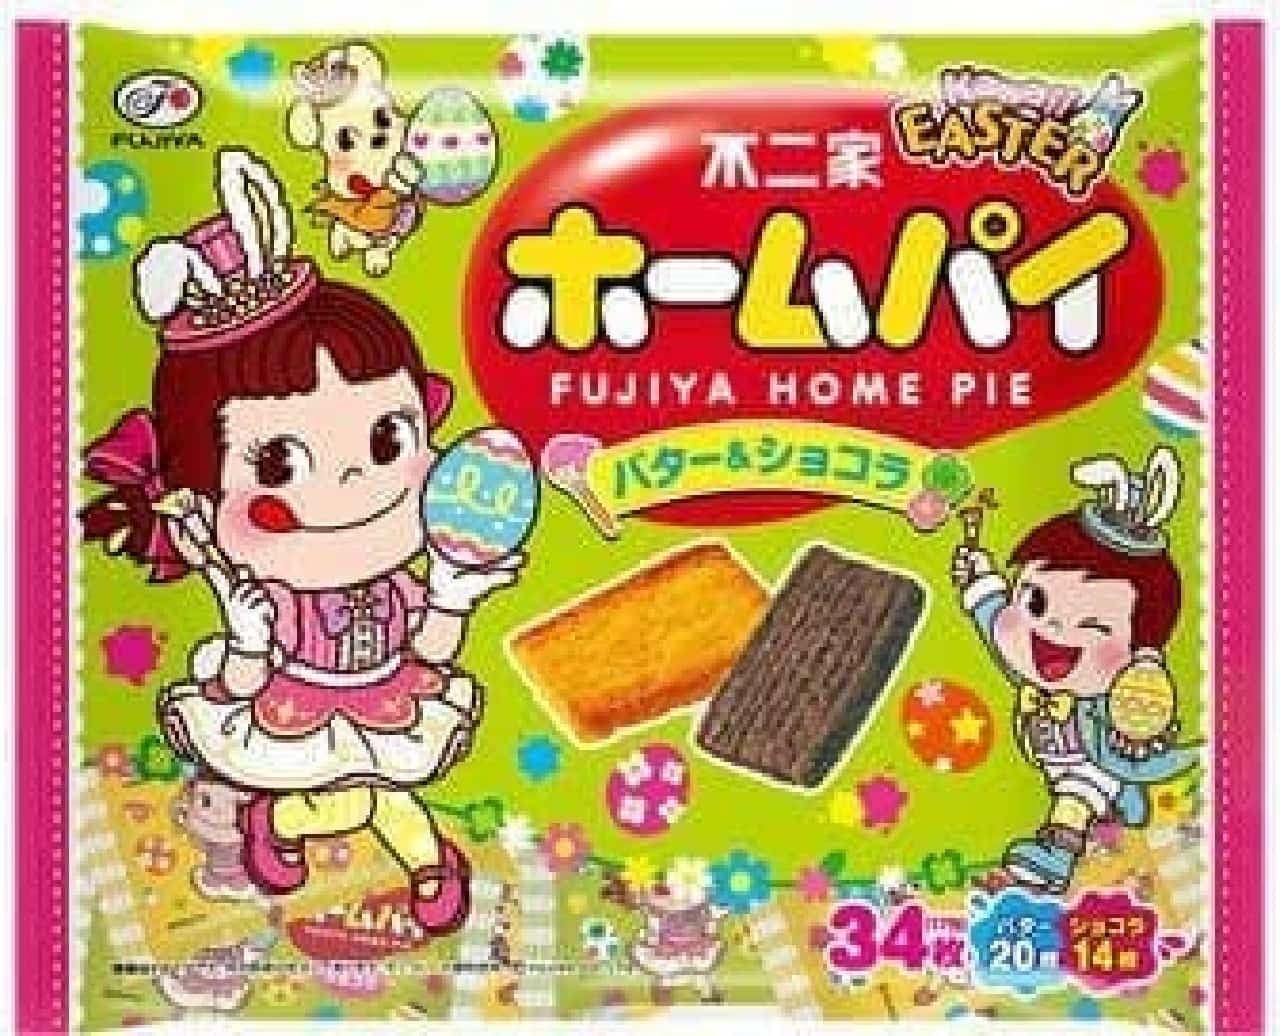 Fujiya "Eastern Home Pie (Butter & Chocolat)"